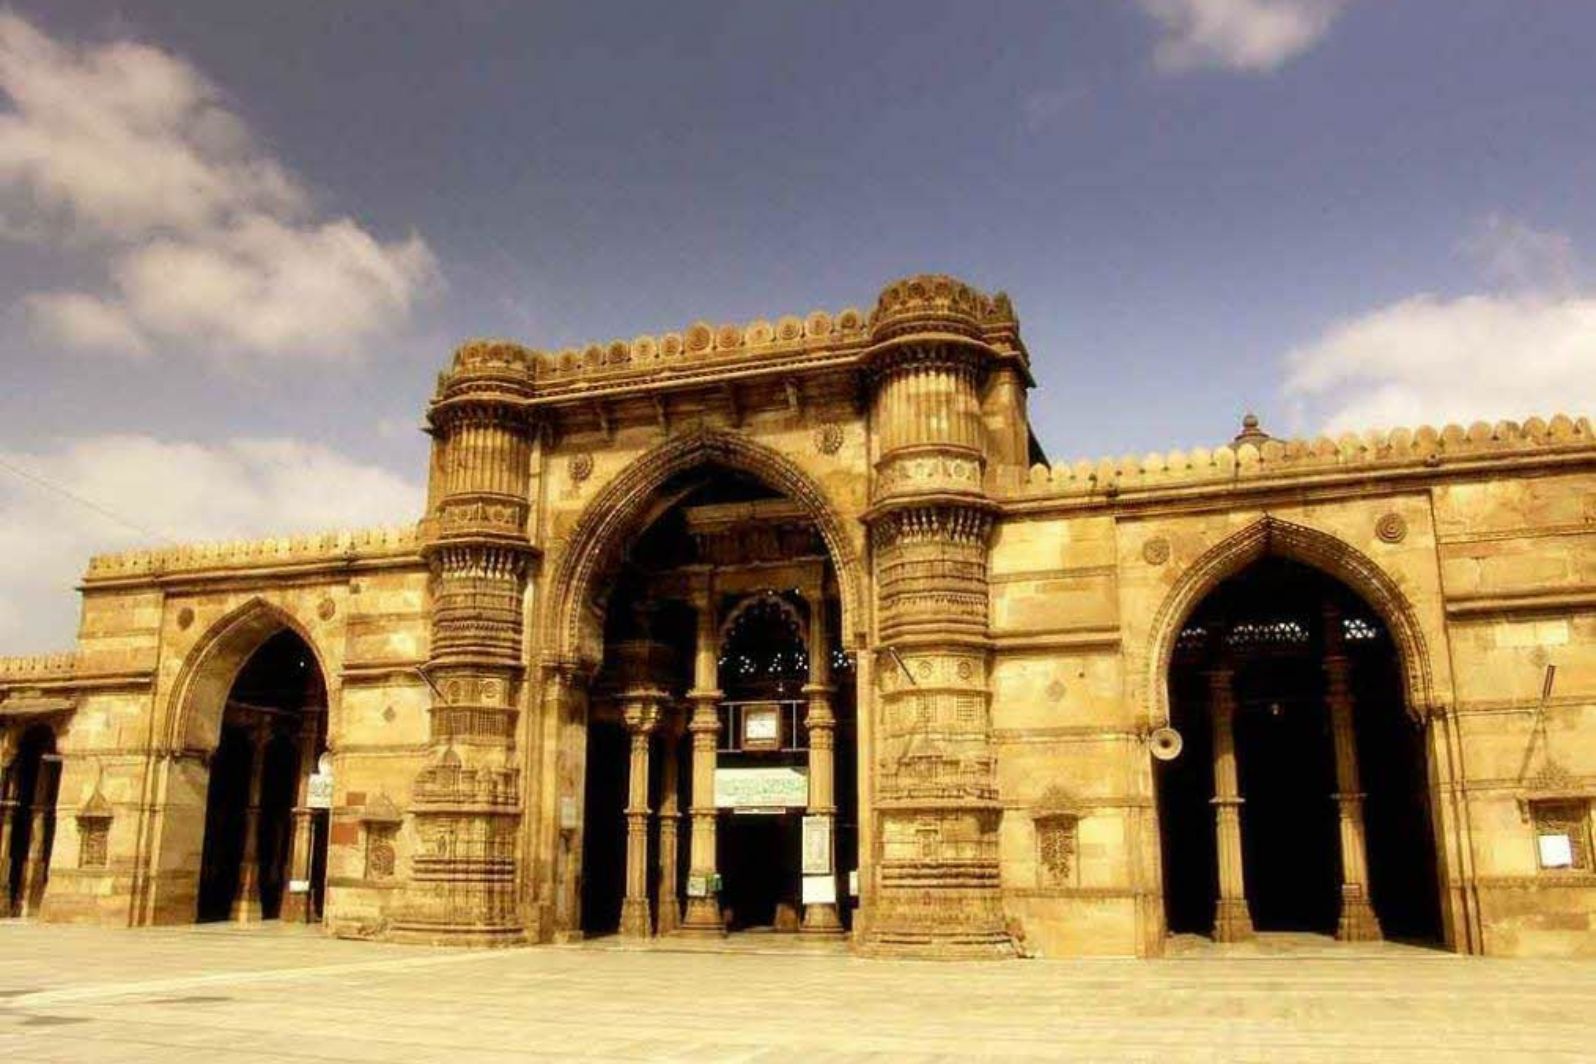 ahmedabad 3 darwaja historical landmark